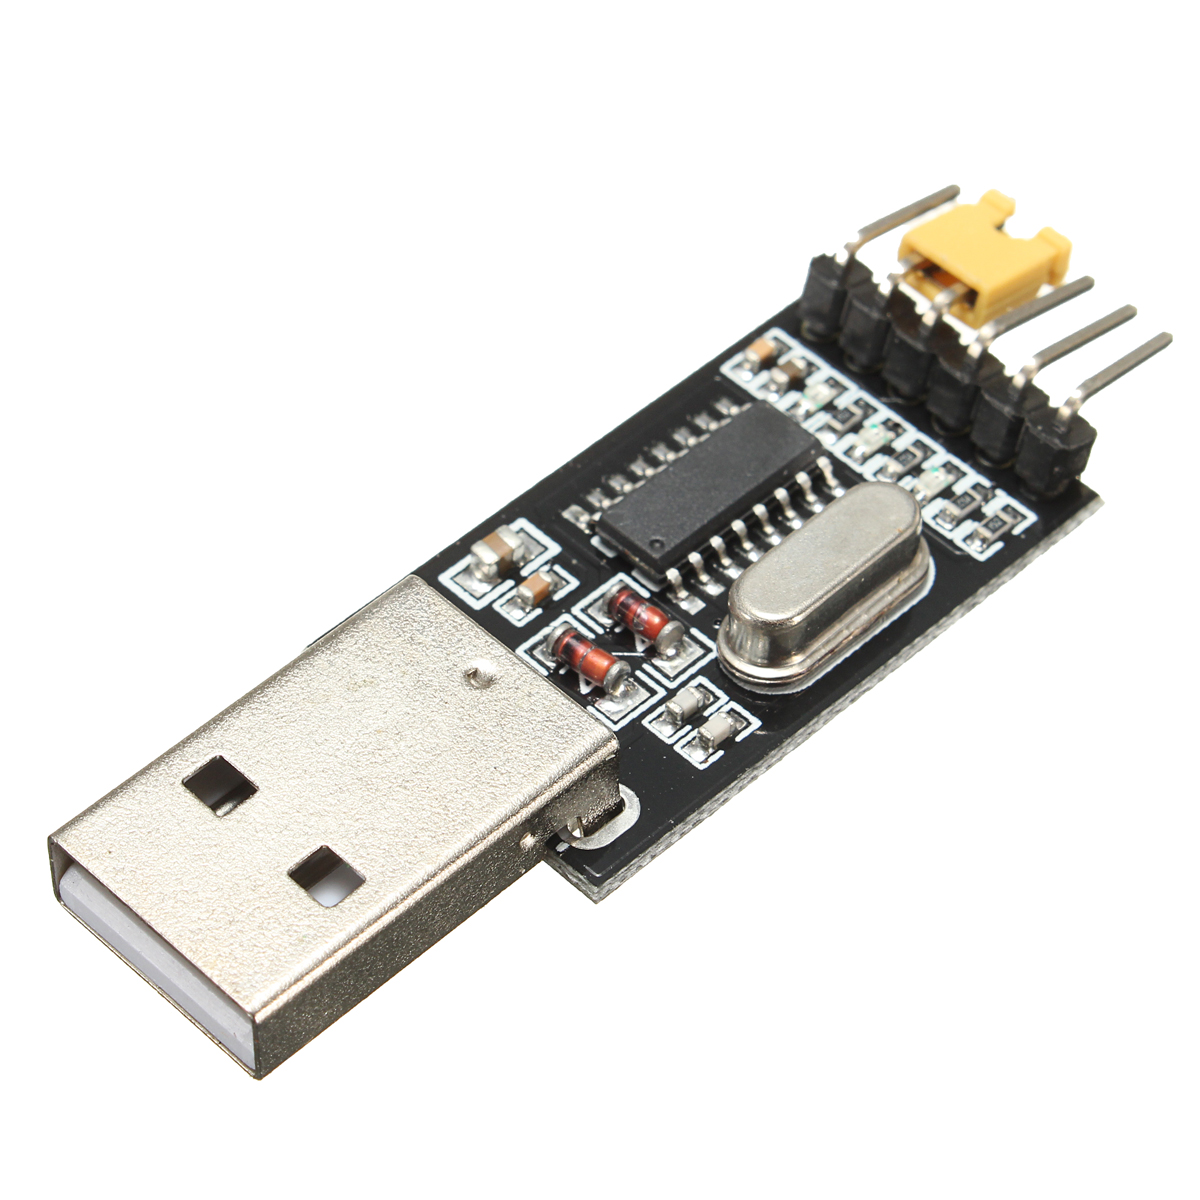 20pcs-33V-5V-USB-to-TTL-Converter-CH340G-UART-Serial-Adapter-Module-STC-1314968-1